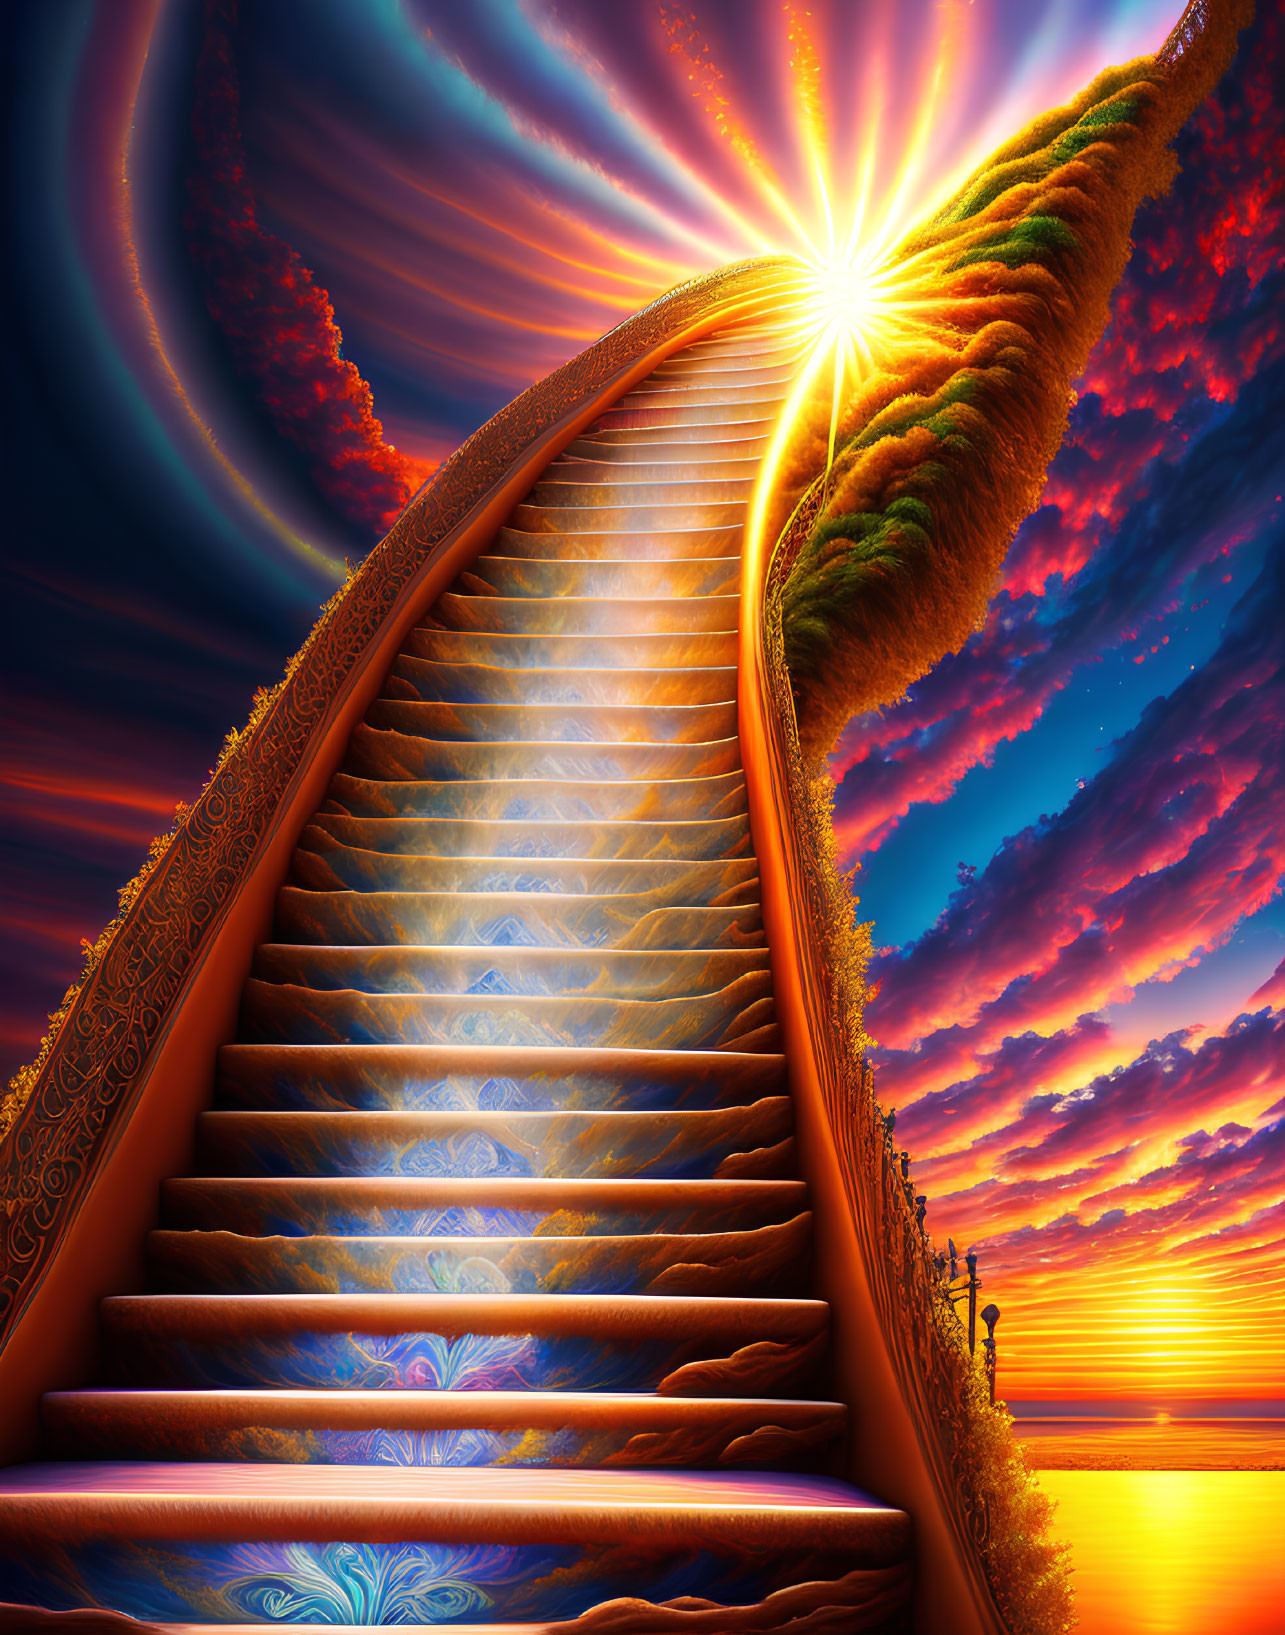 Colorful digital artwork: Ornate staircase under sunset sky